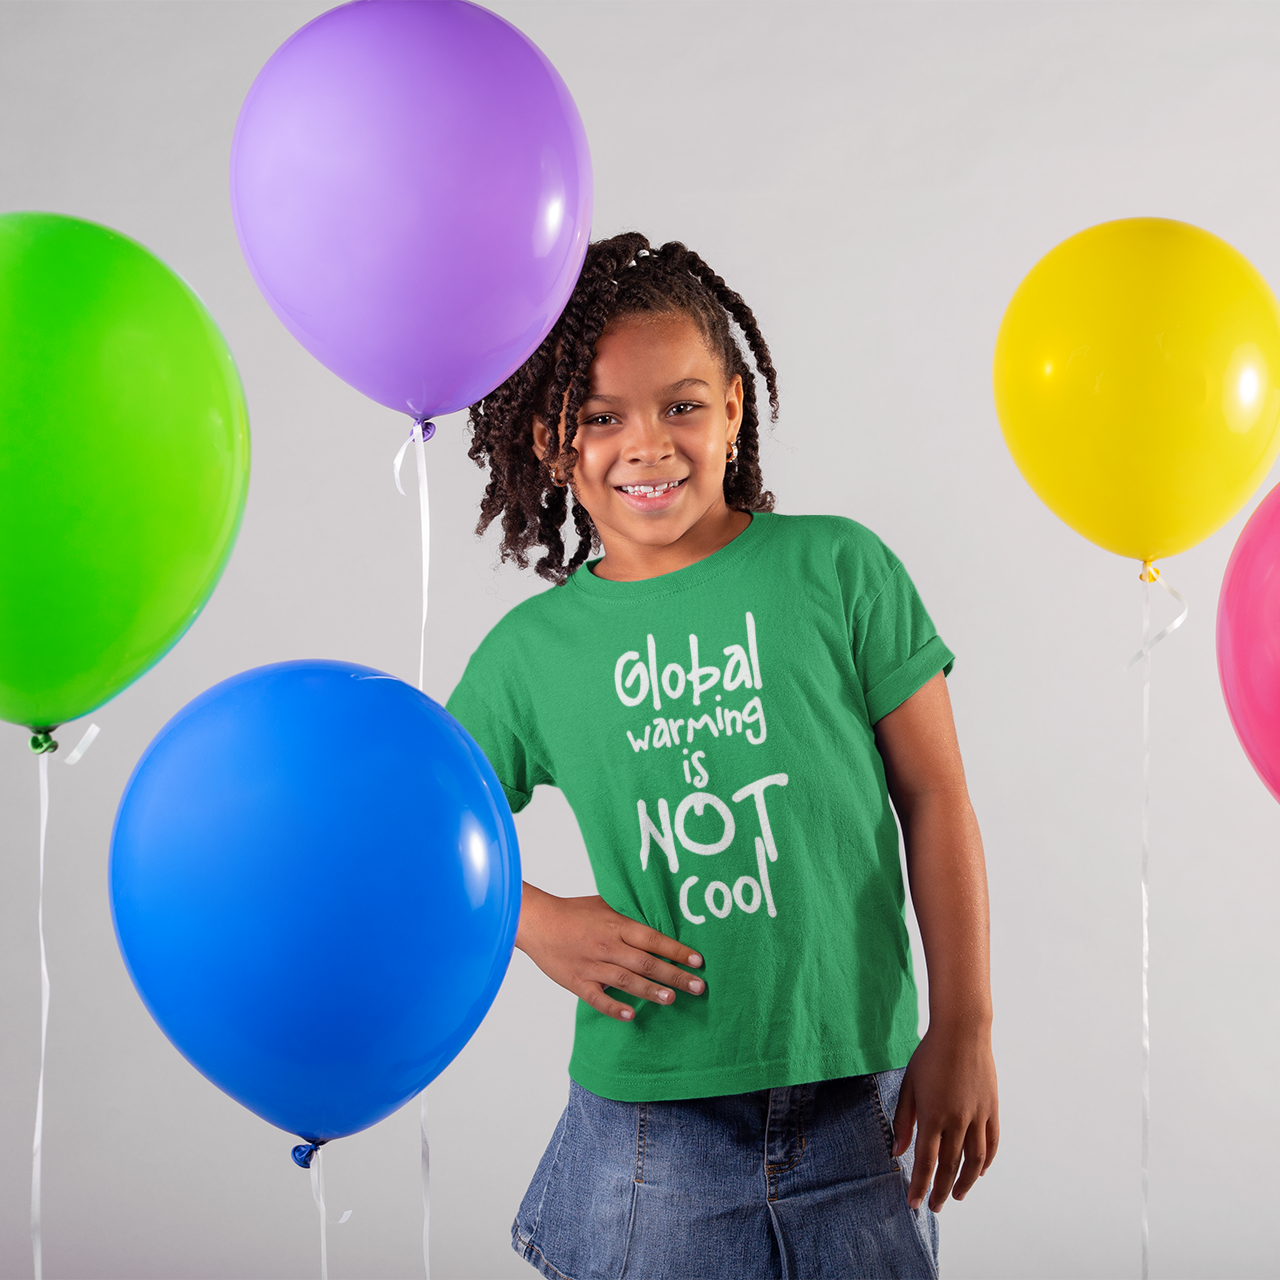 'Global warming is not cool' kids shortsleeve shirt